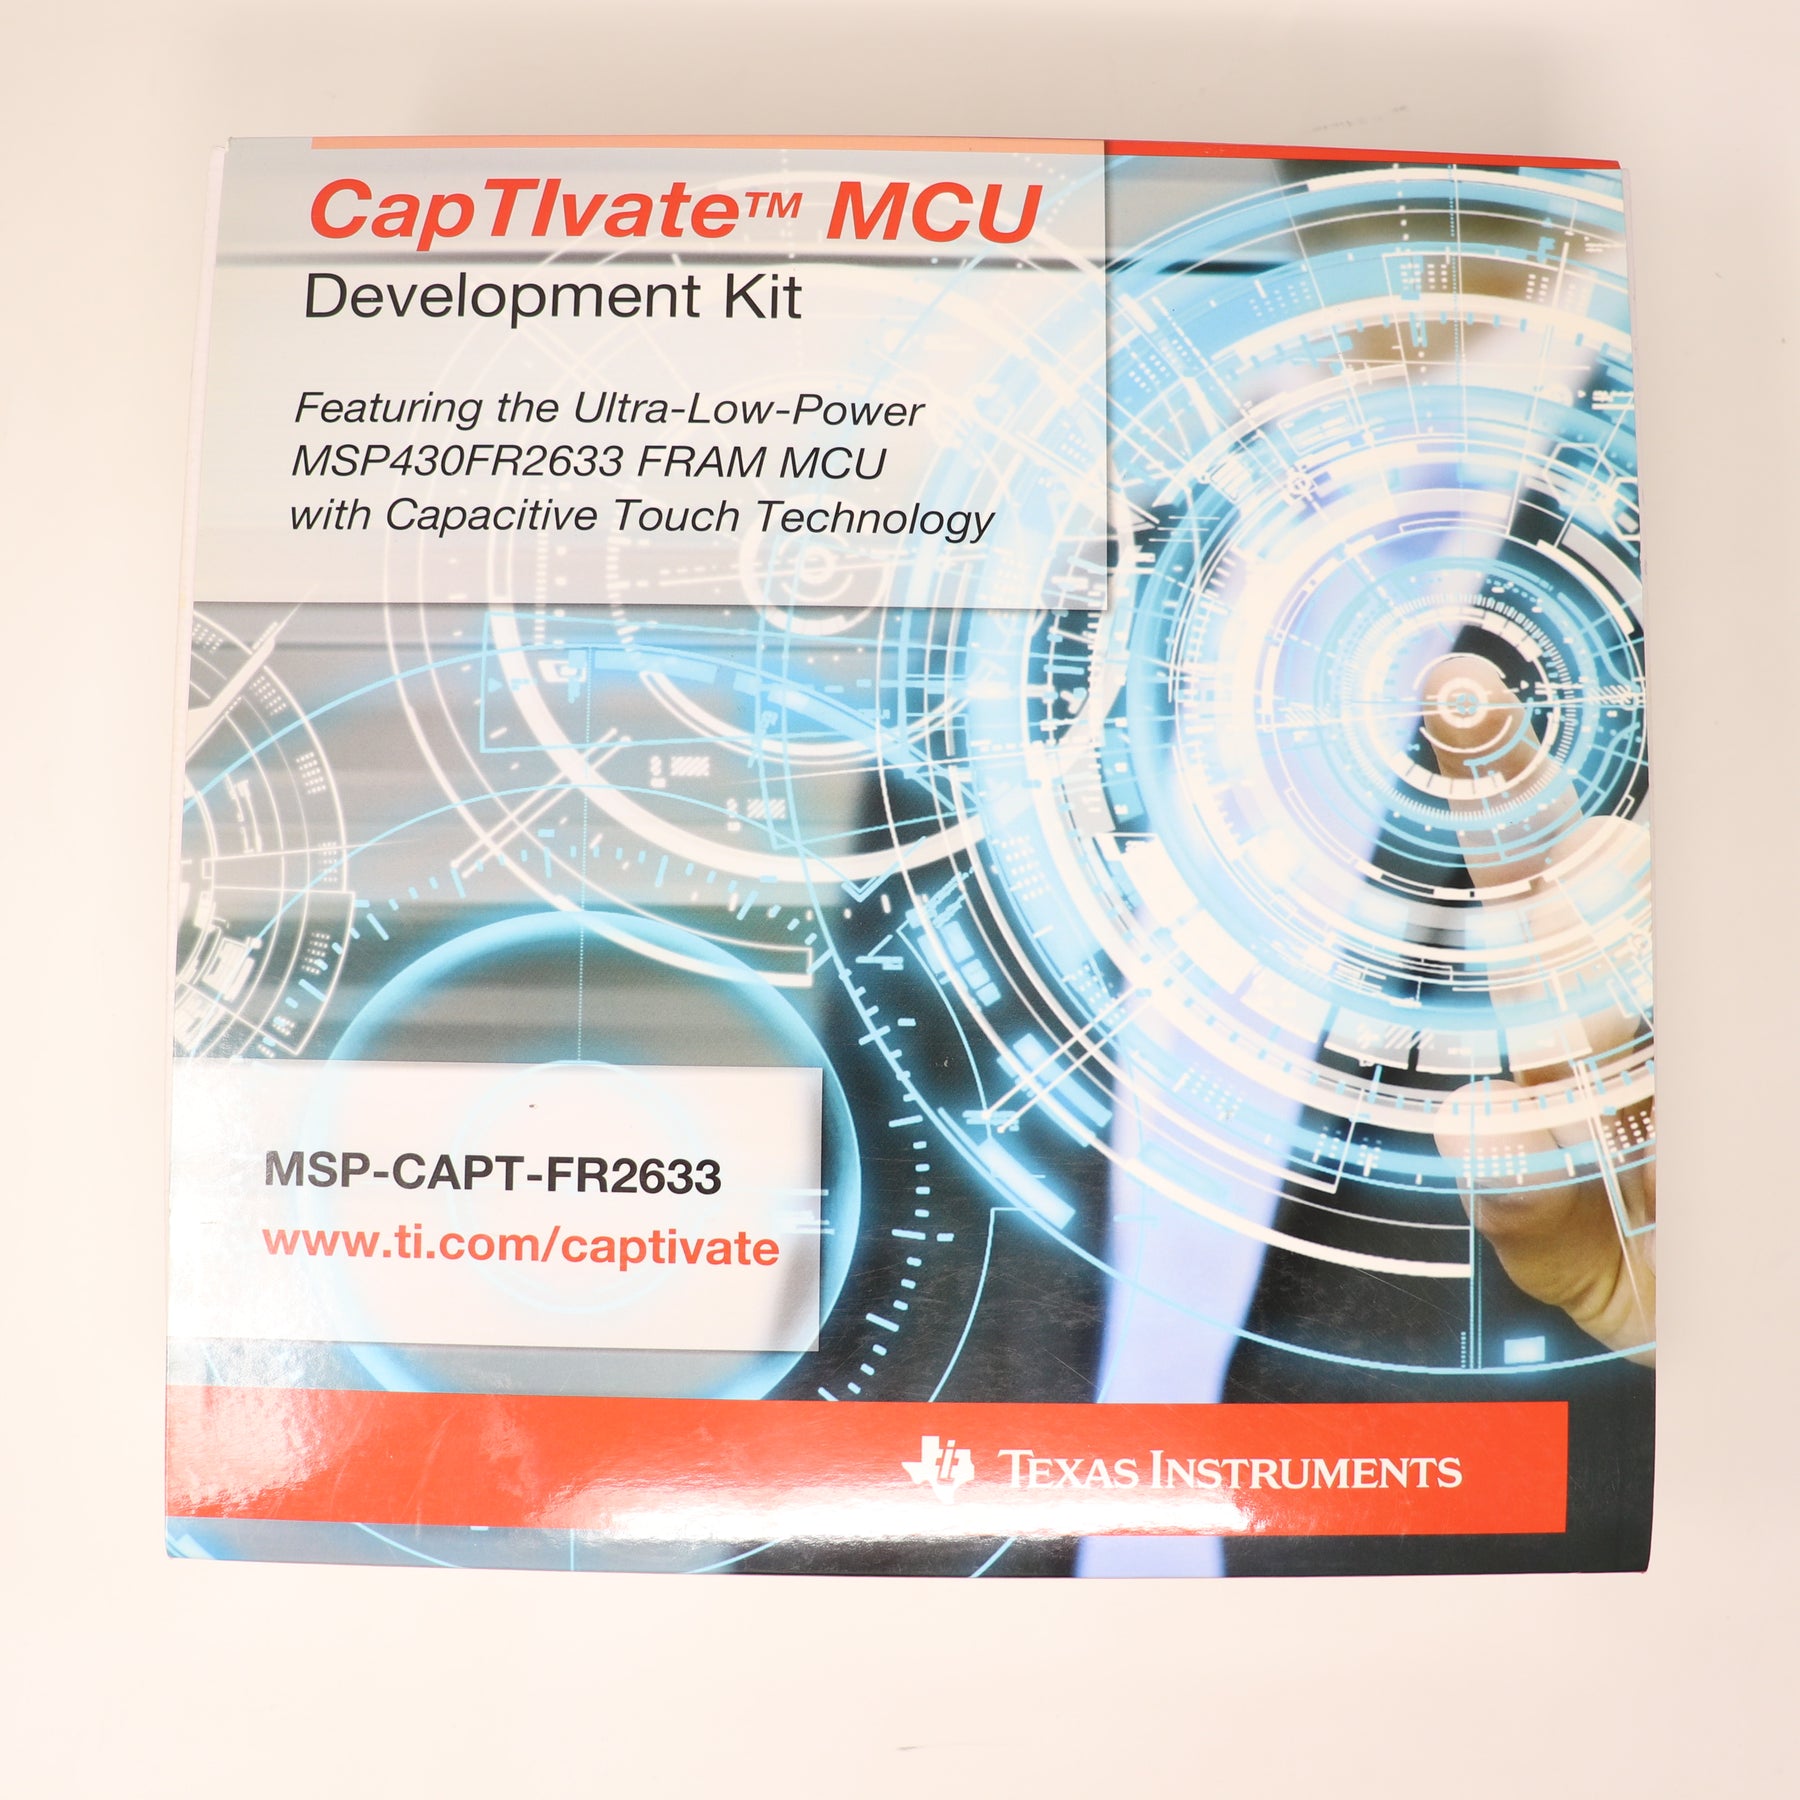 Texas Instruments TI CapTIvate MCU MSP-CAPT-FR2633 296-43746-ND Development Kit